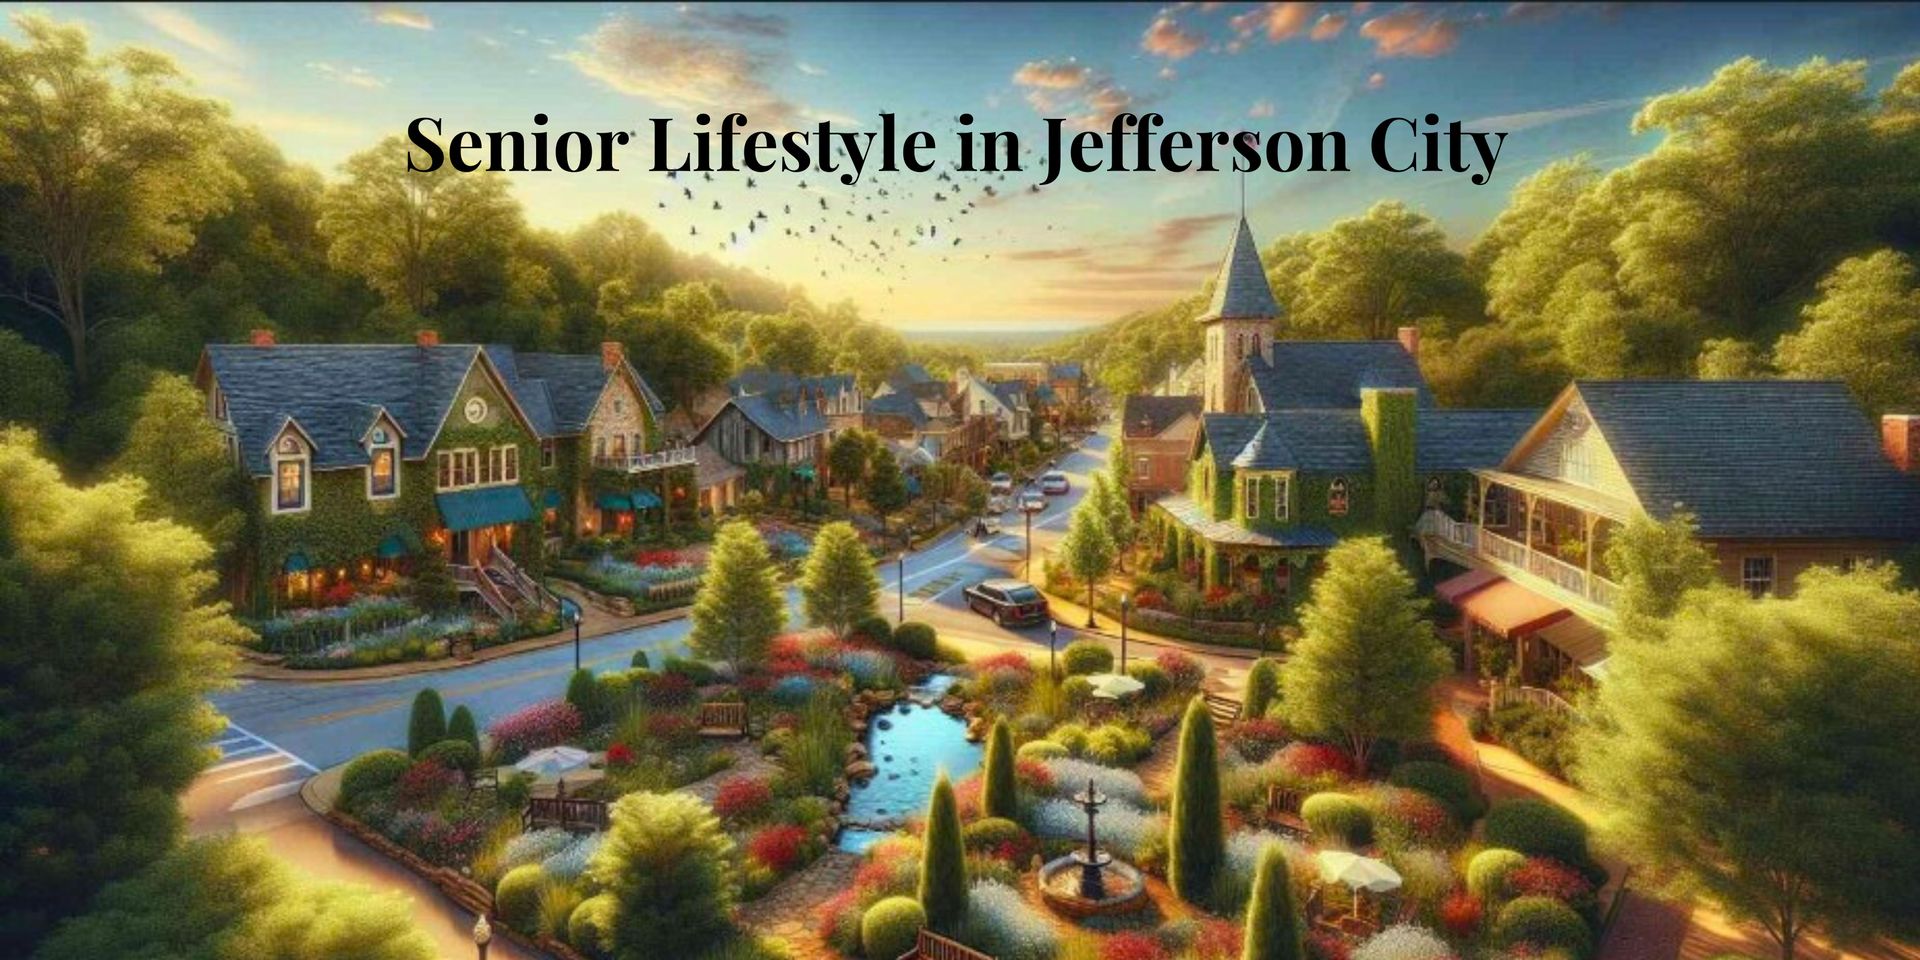 Senior Lifestyle in Jefferson City